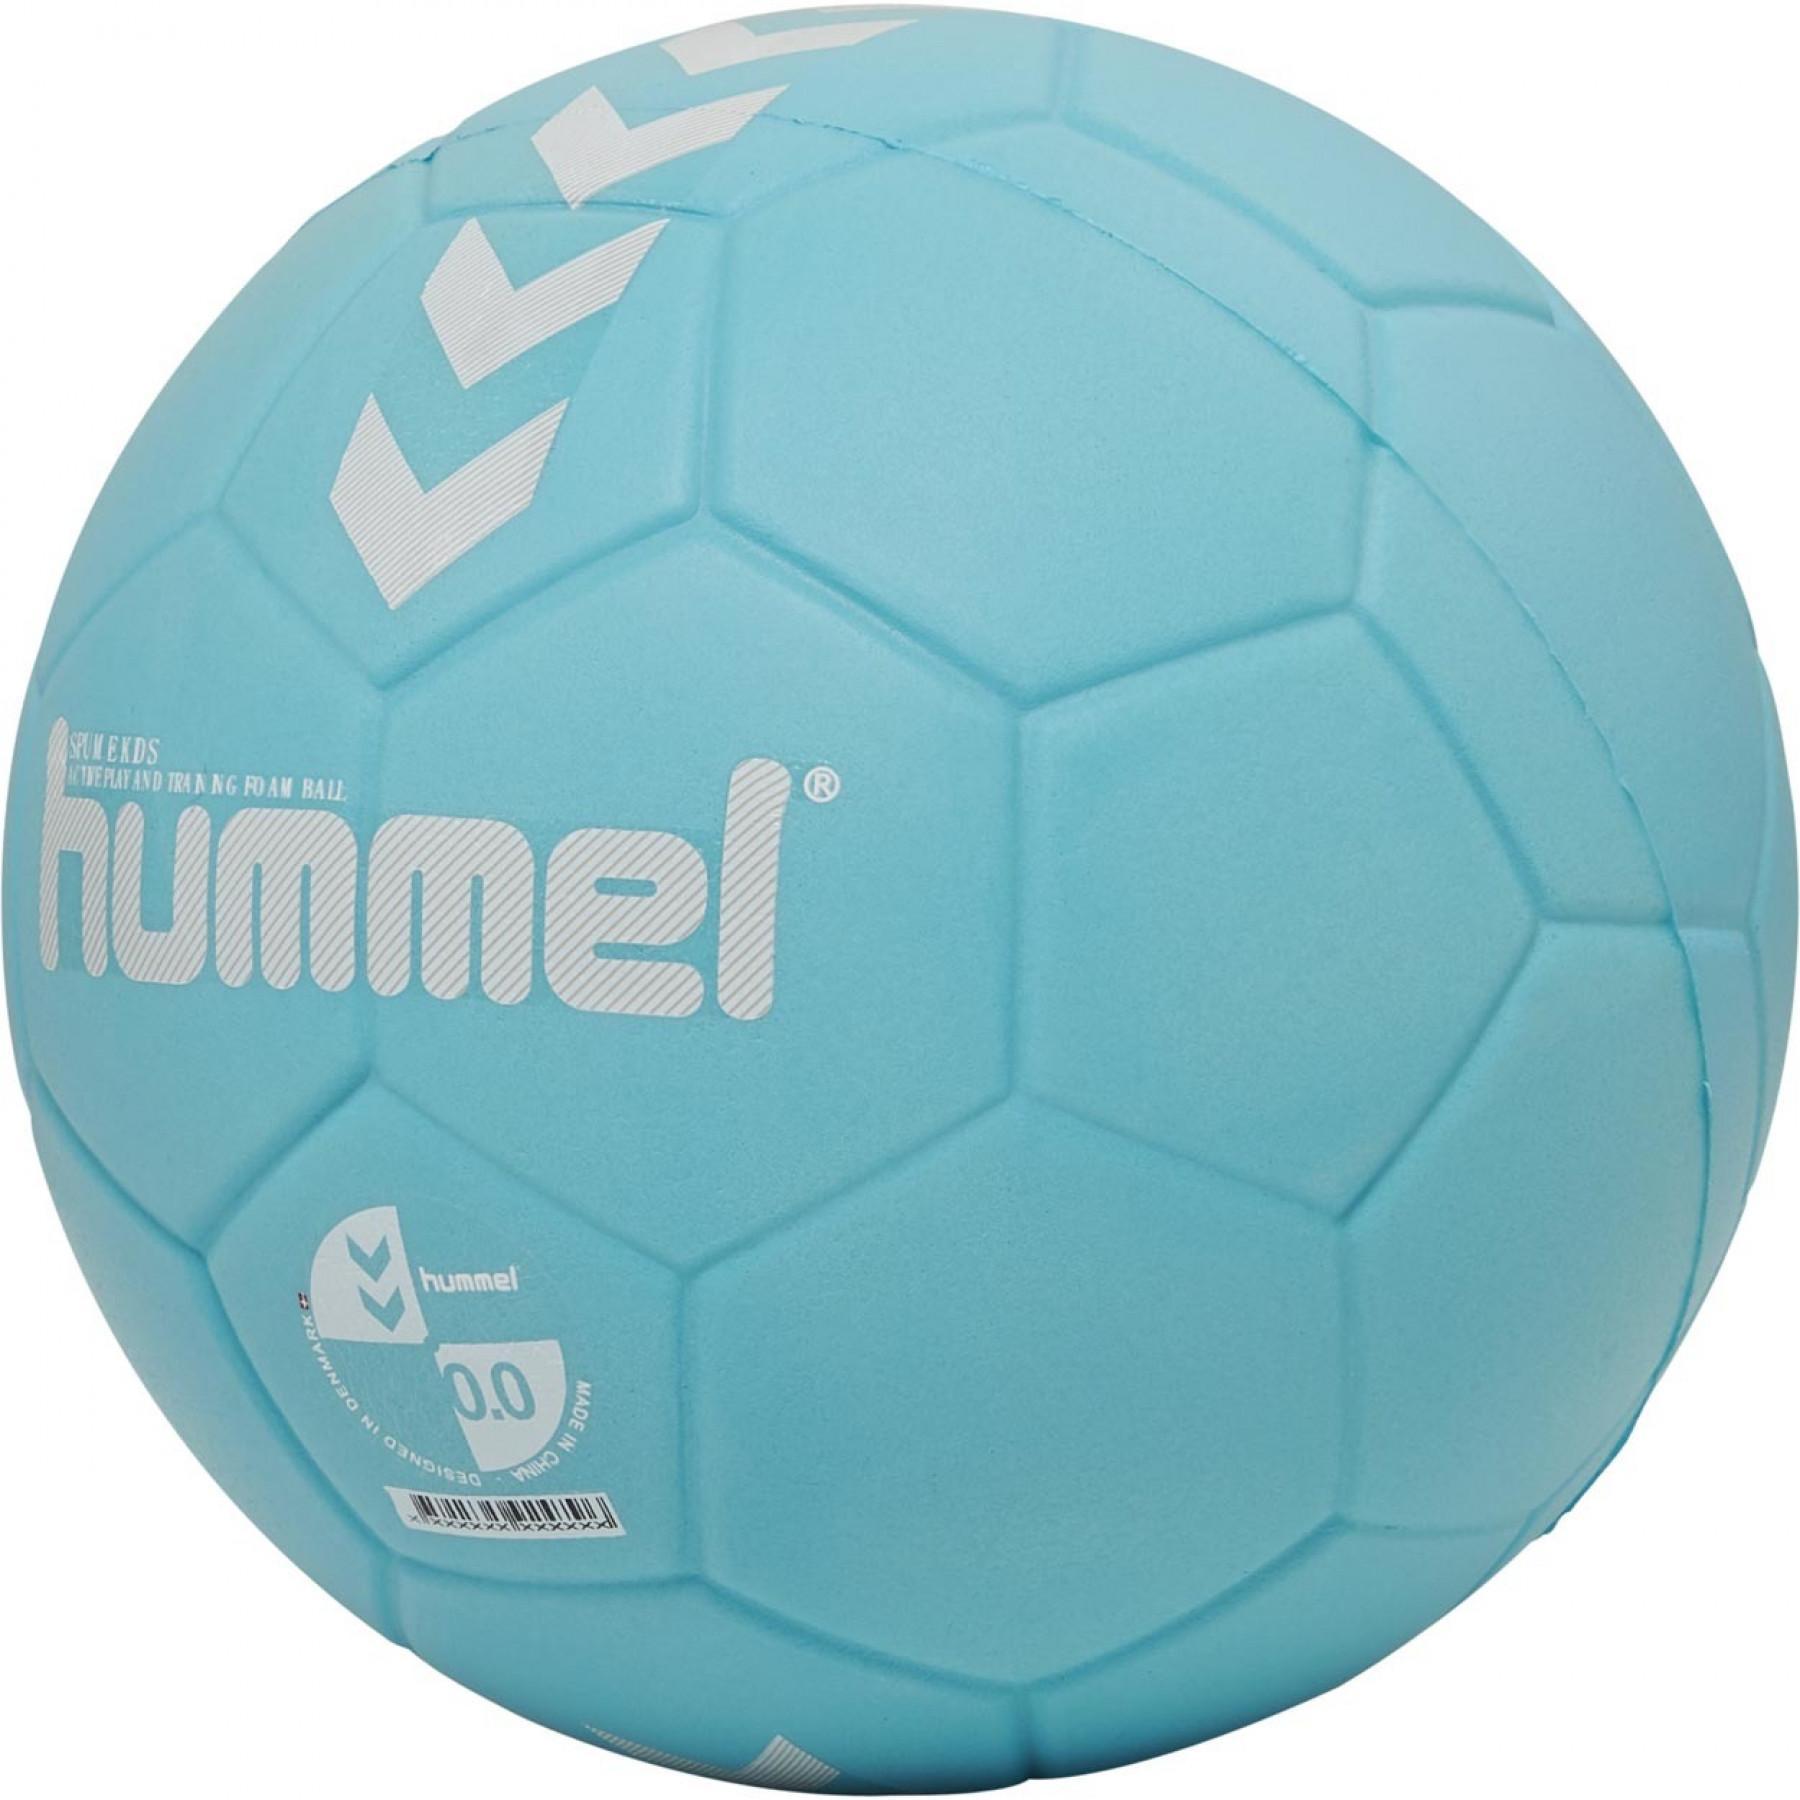 Children's ball Hummel Spume (Mousse)